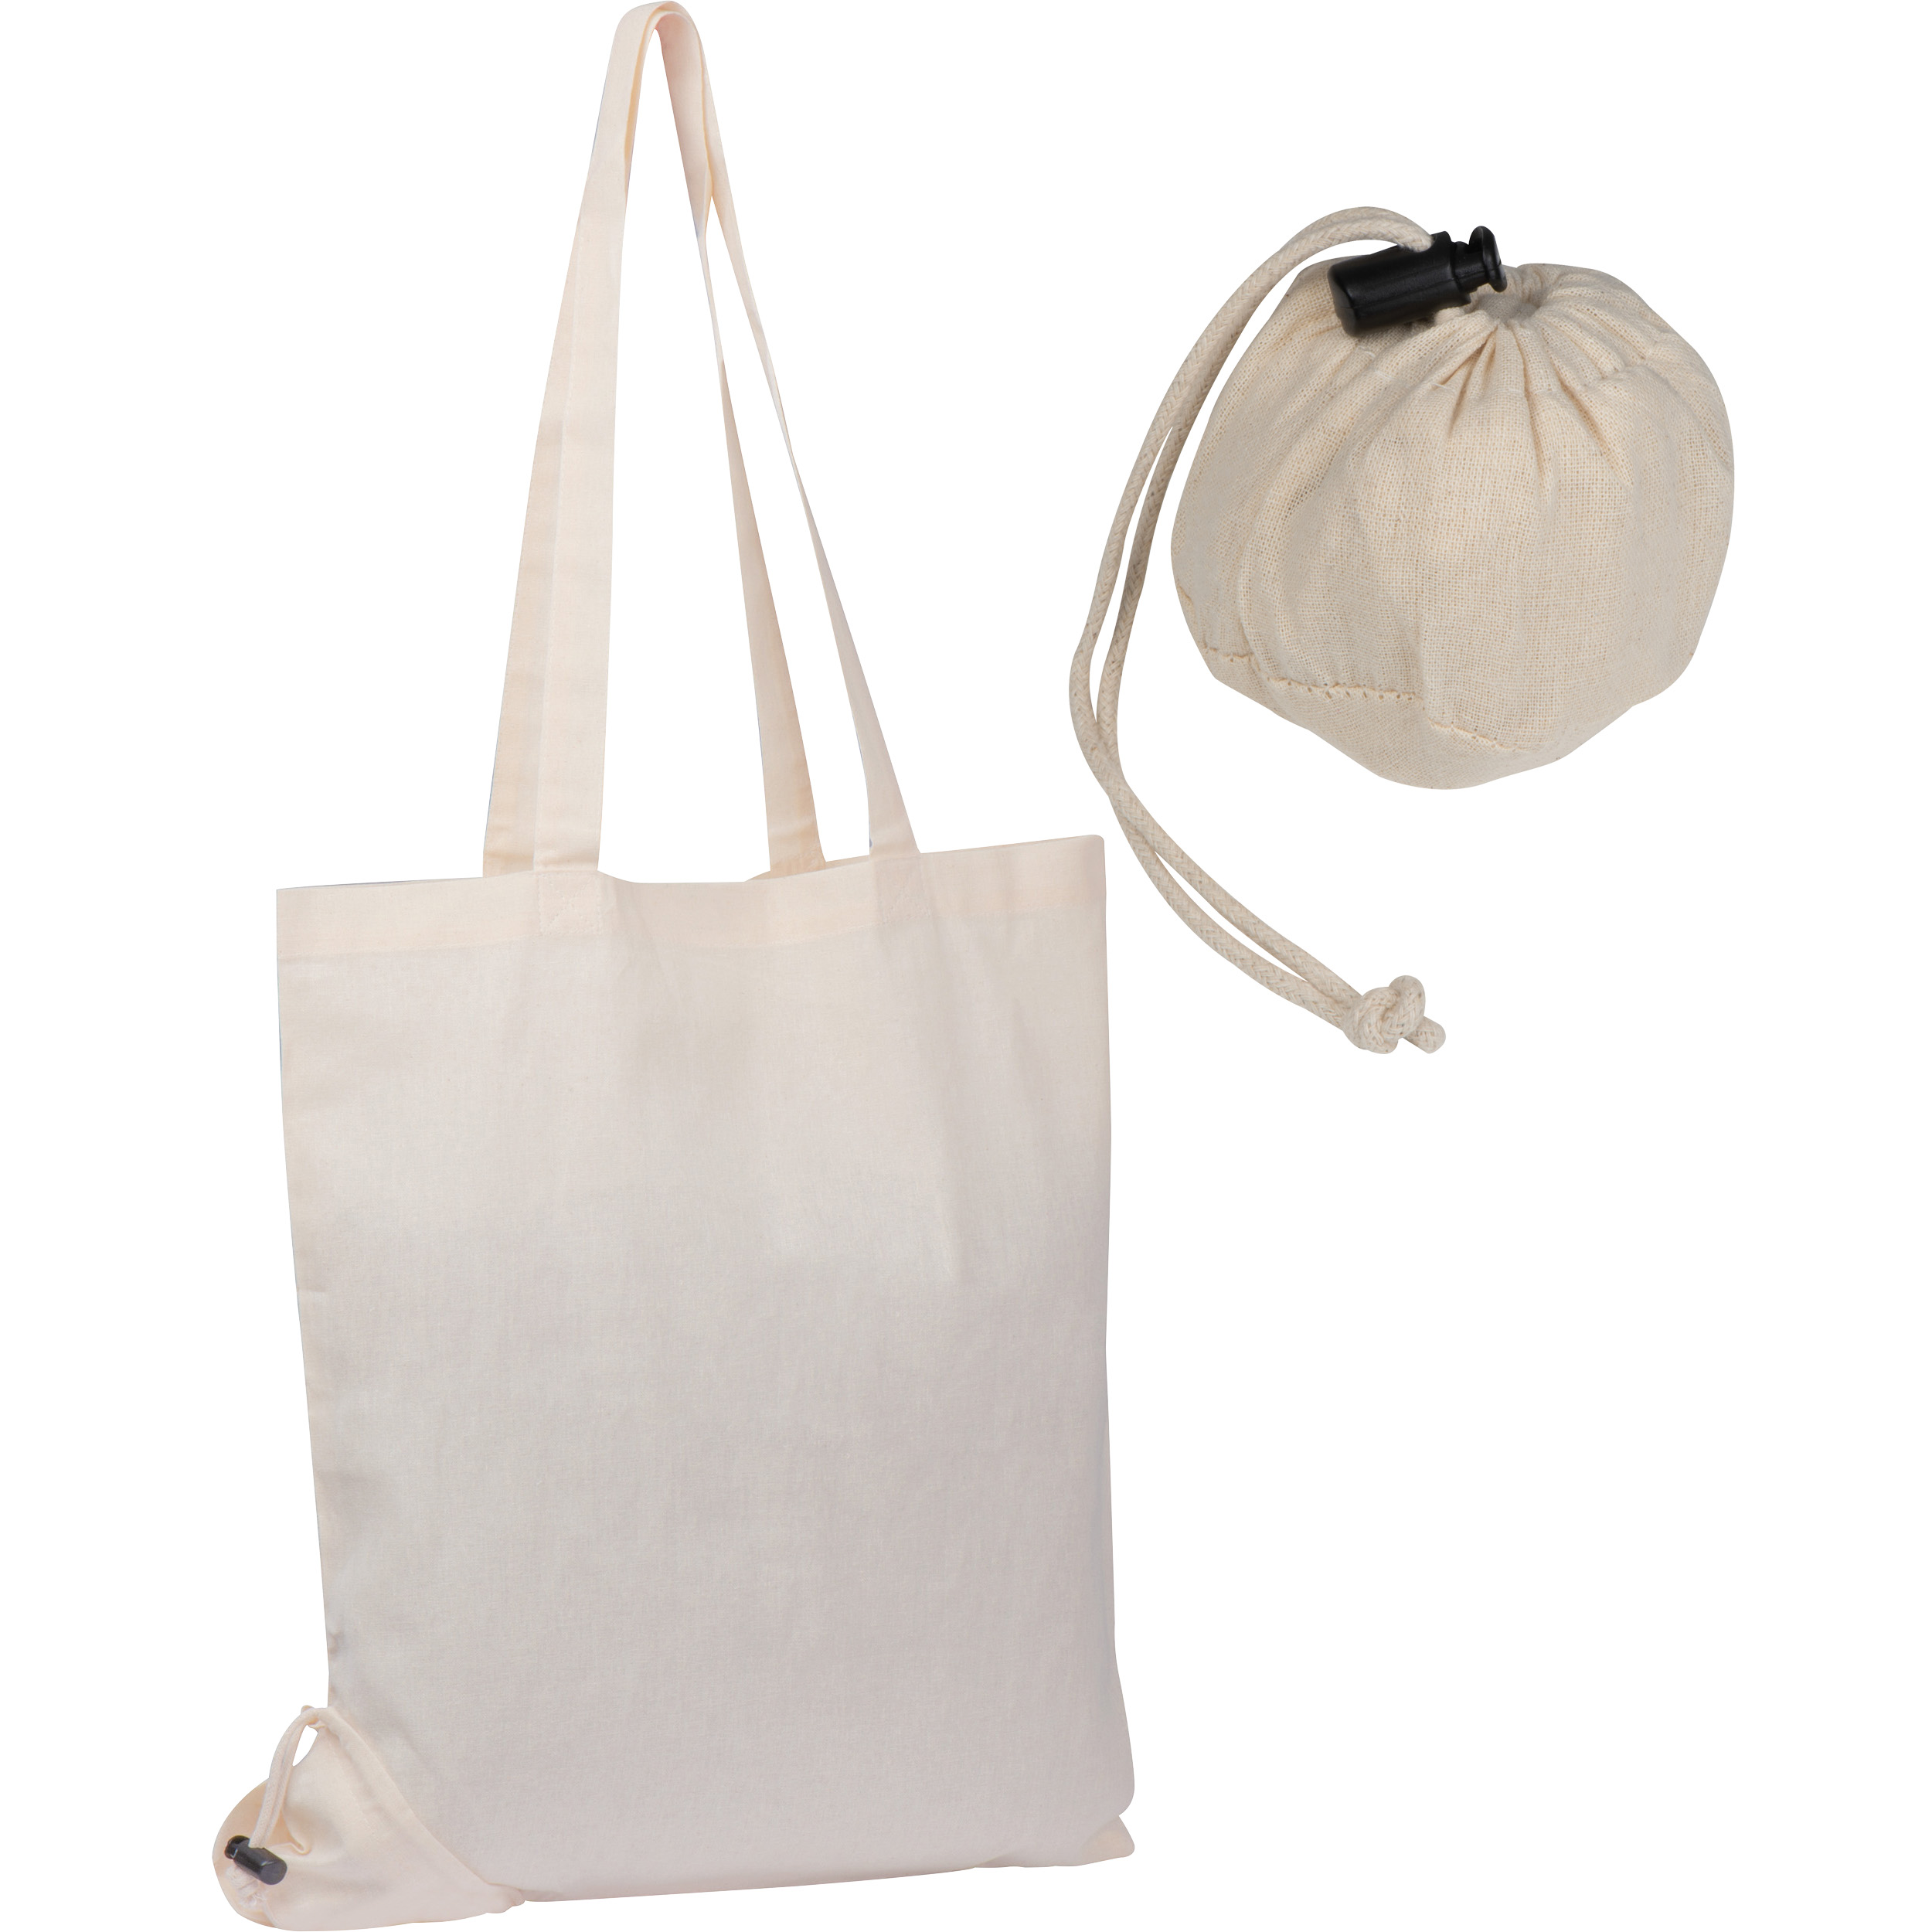 Eco-friendly tote bag - Houffalize - Nuneaton